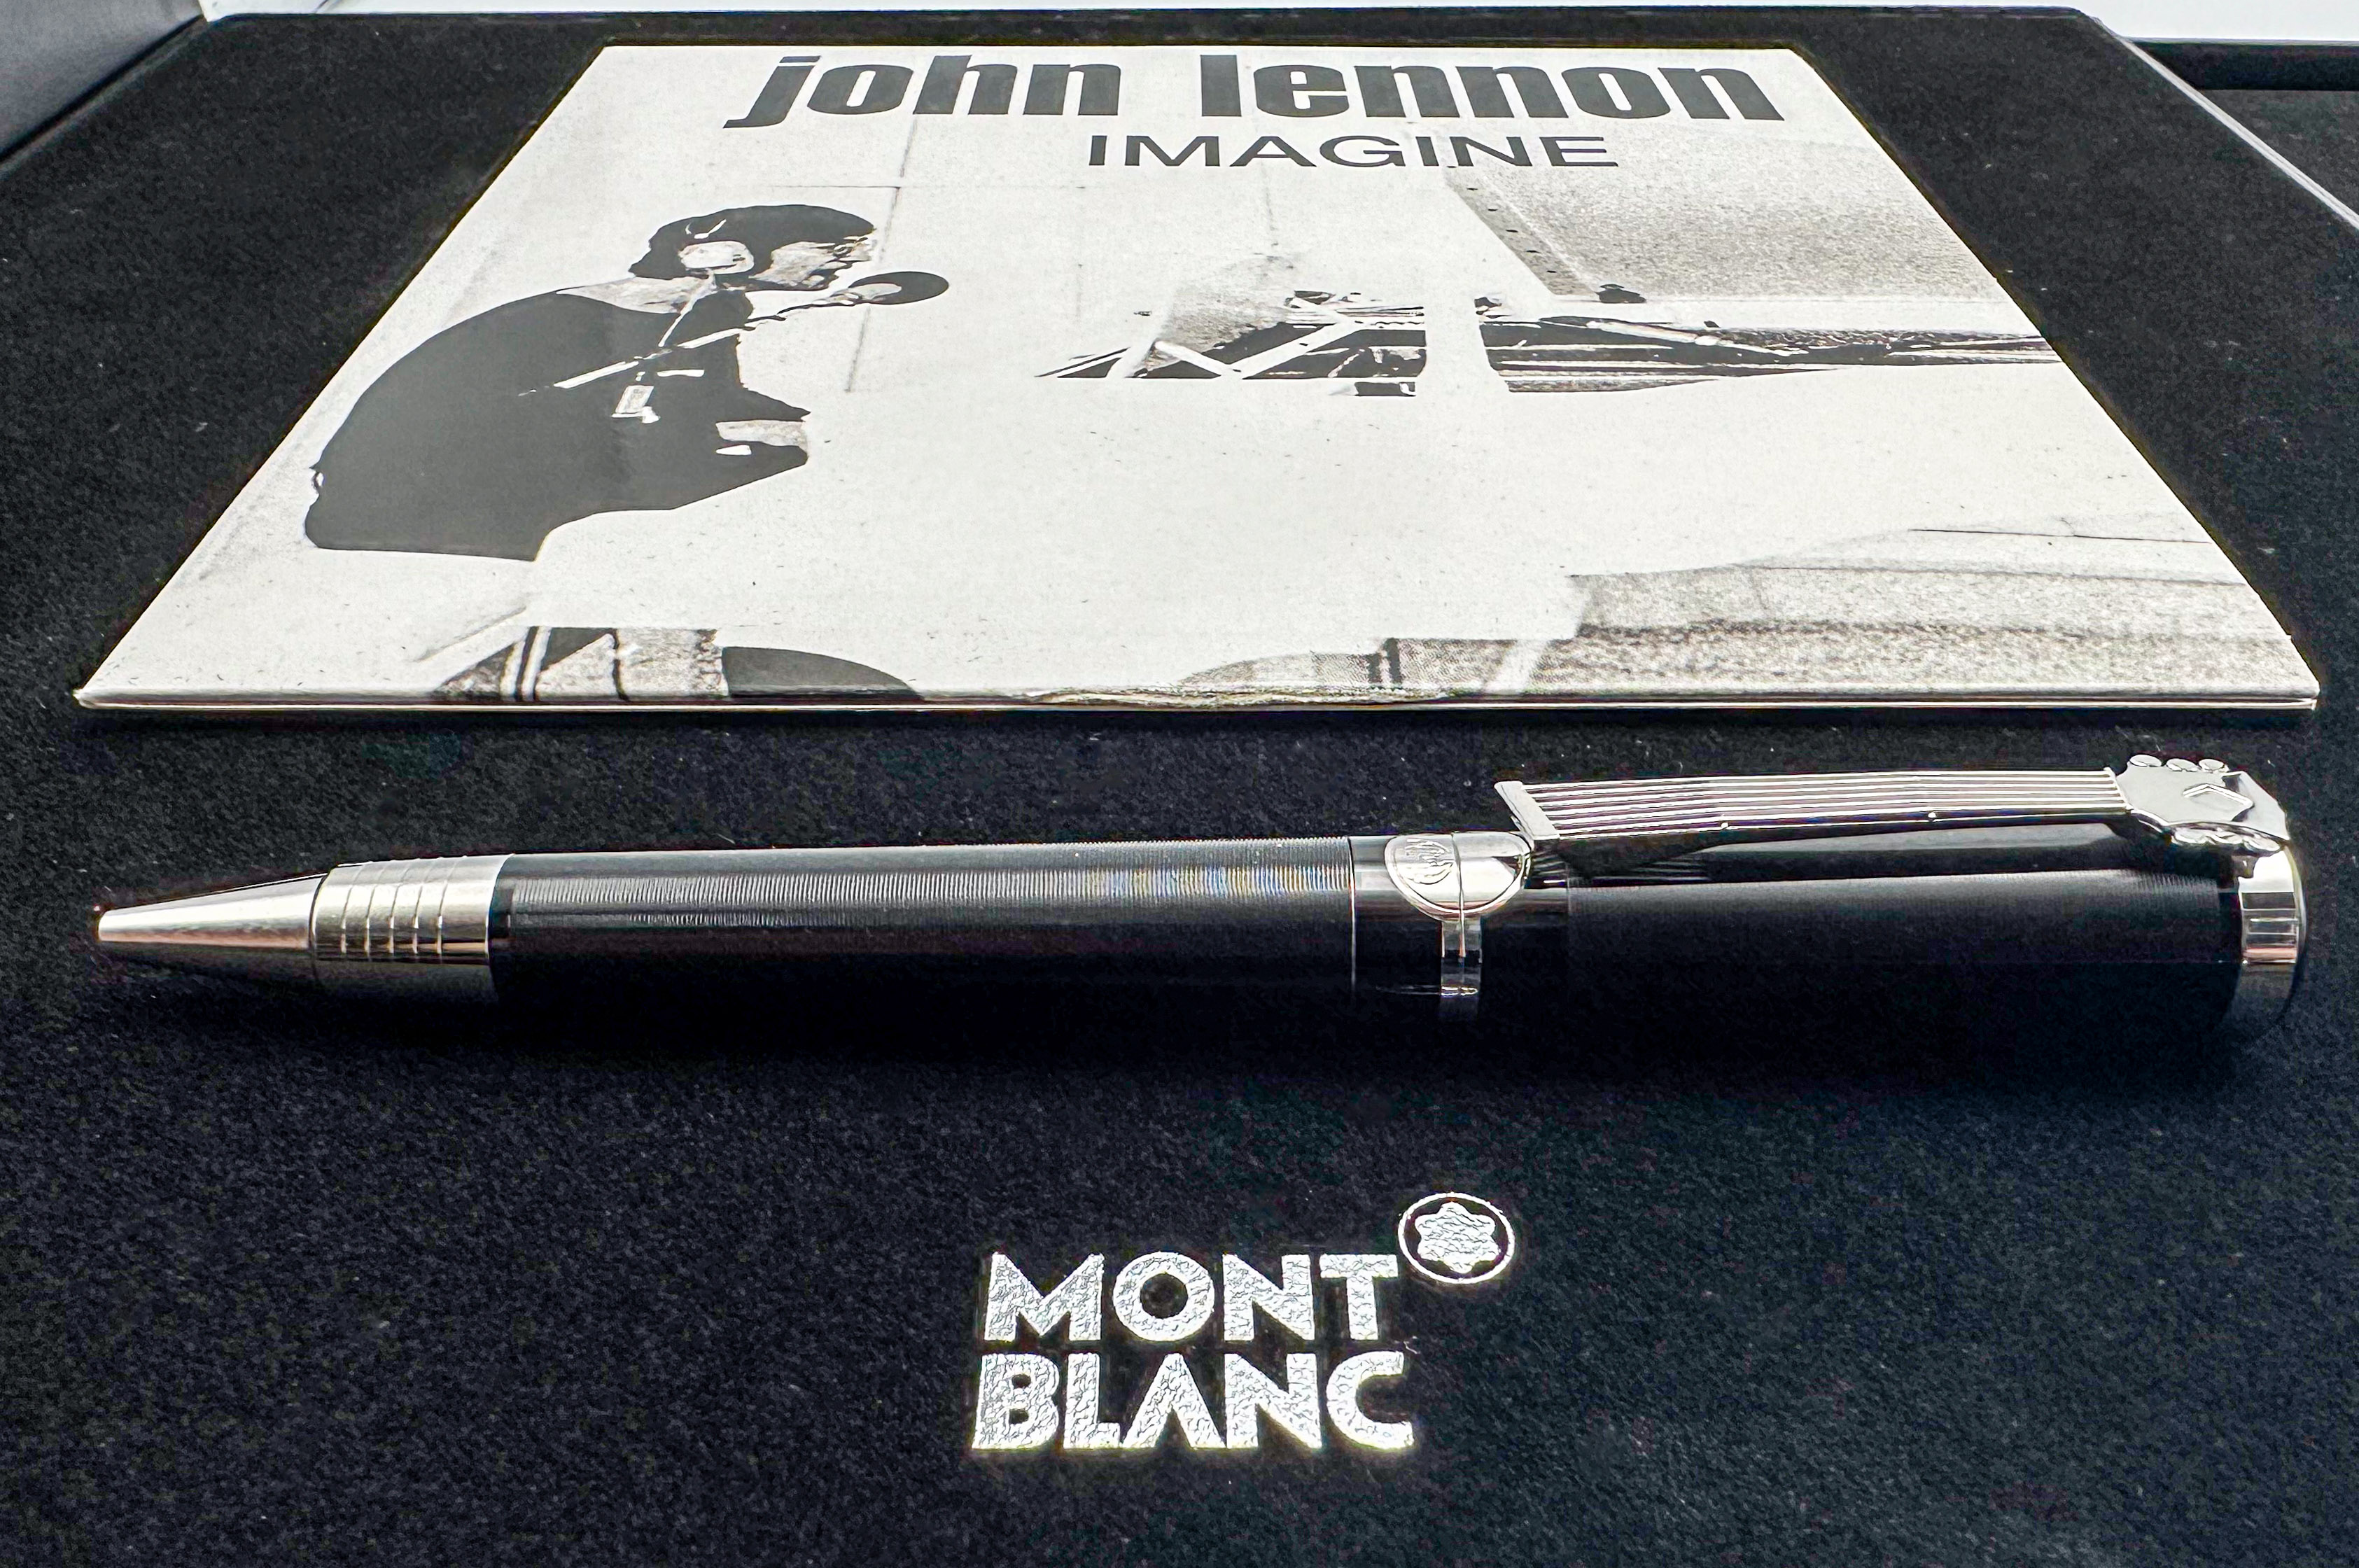 Mont Blanc, John Lennon special edition Ballpoint pen with Imagine vinyl record - Image 2 of 4